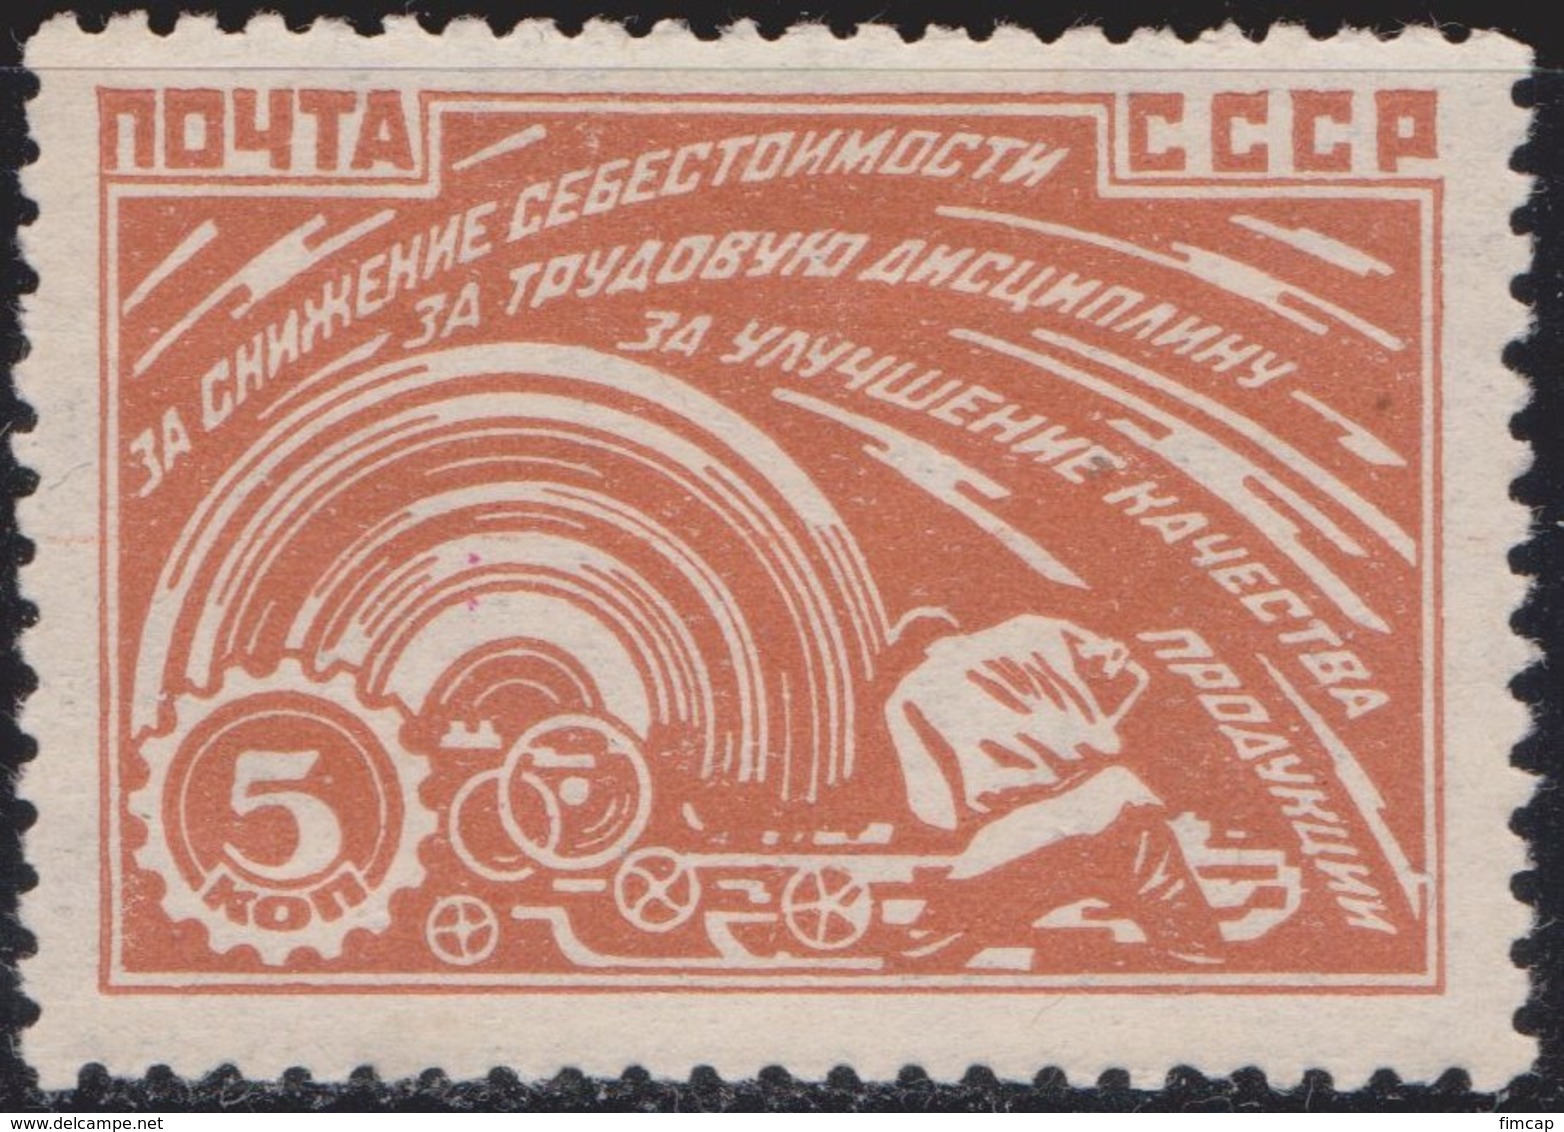 Russia USSR 1929, Michel 379, **, MNH OG, See Scans - Unused Stamps